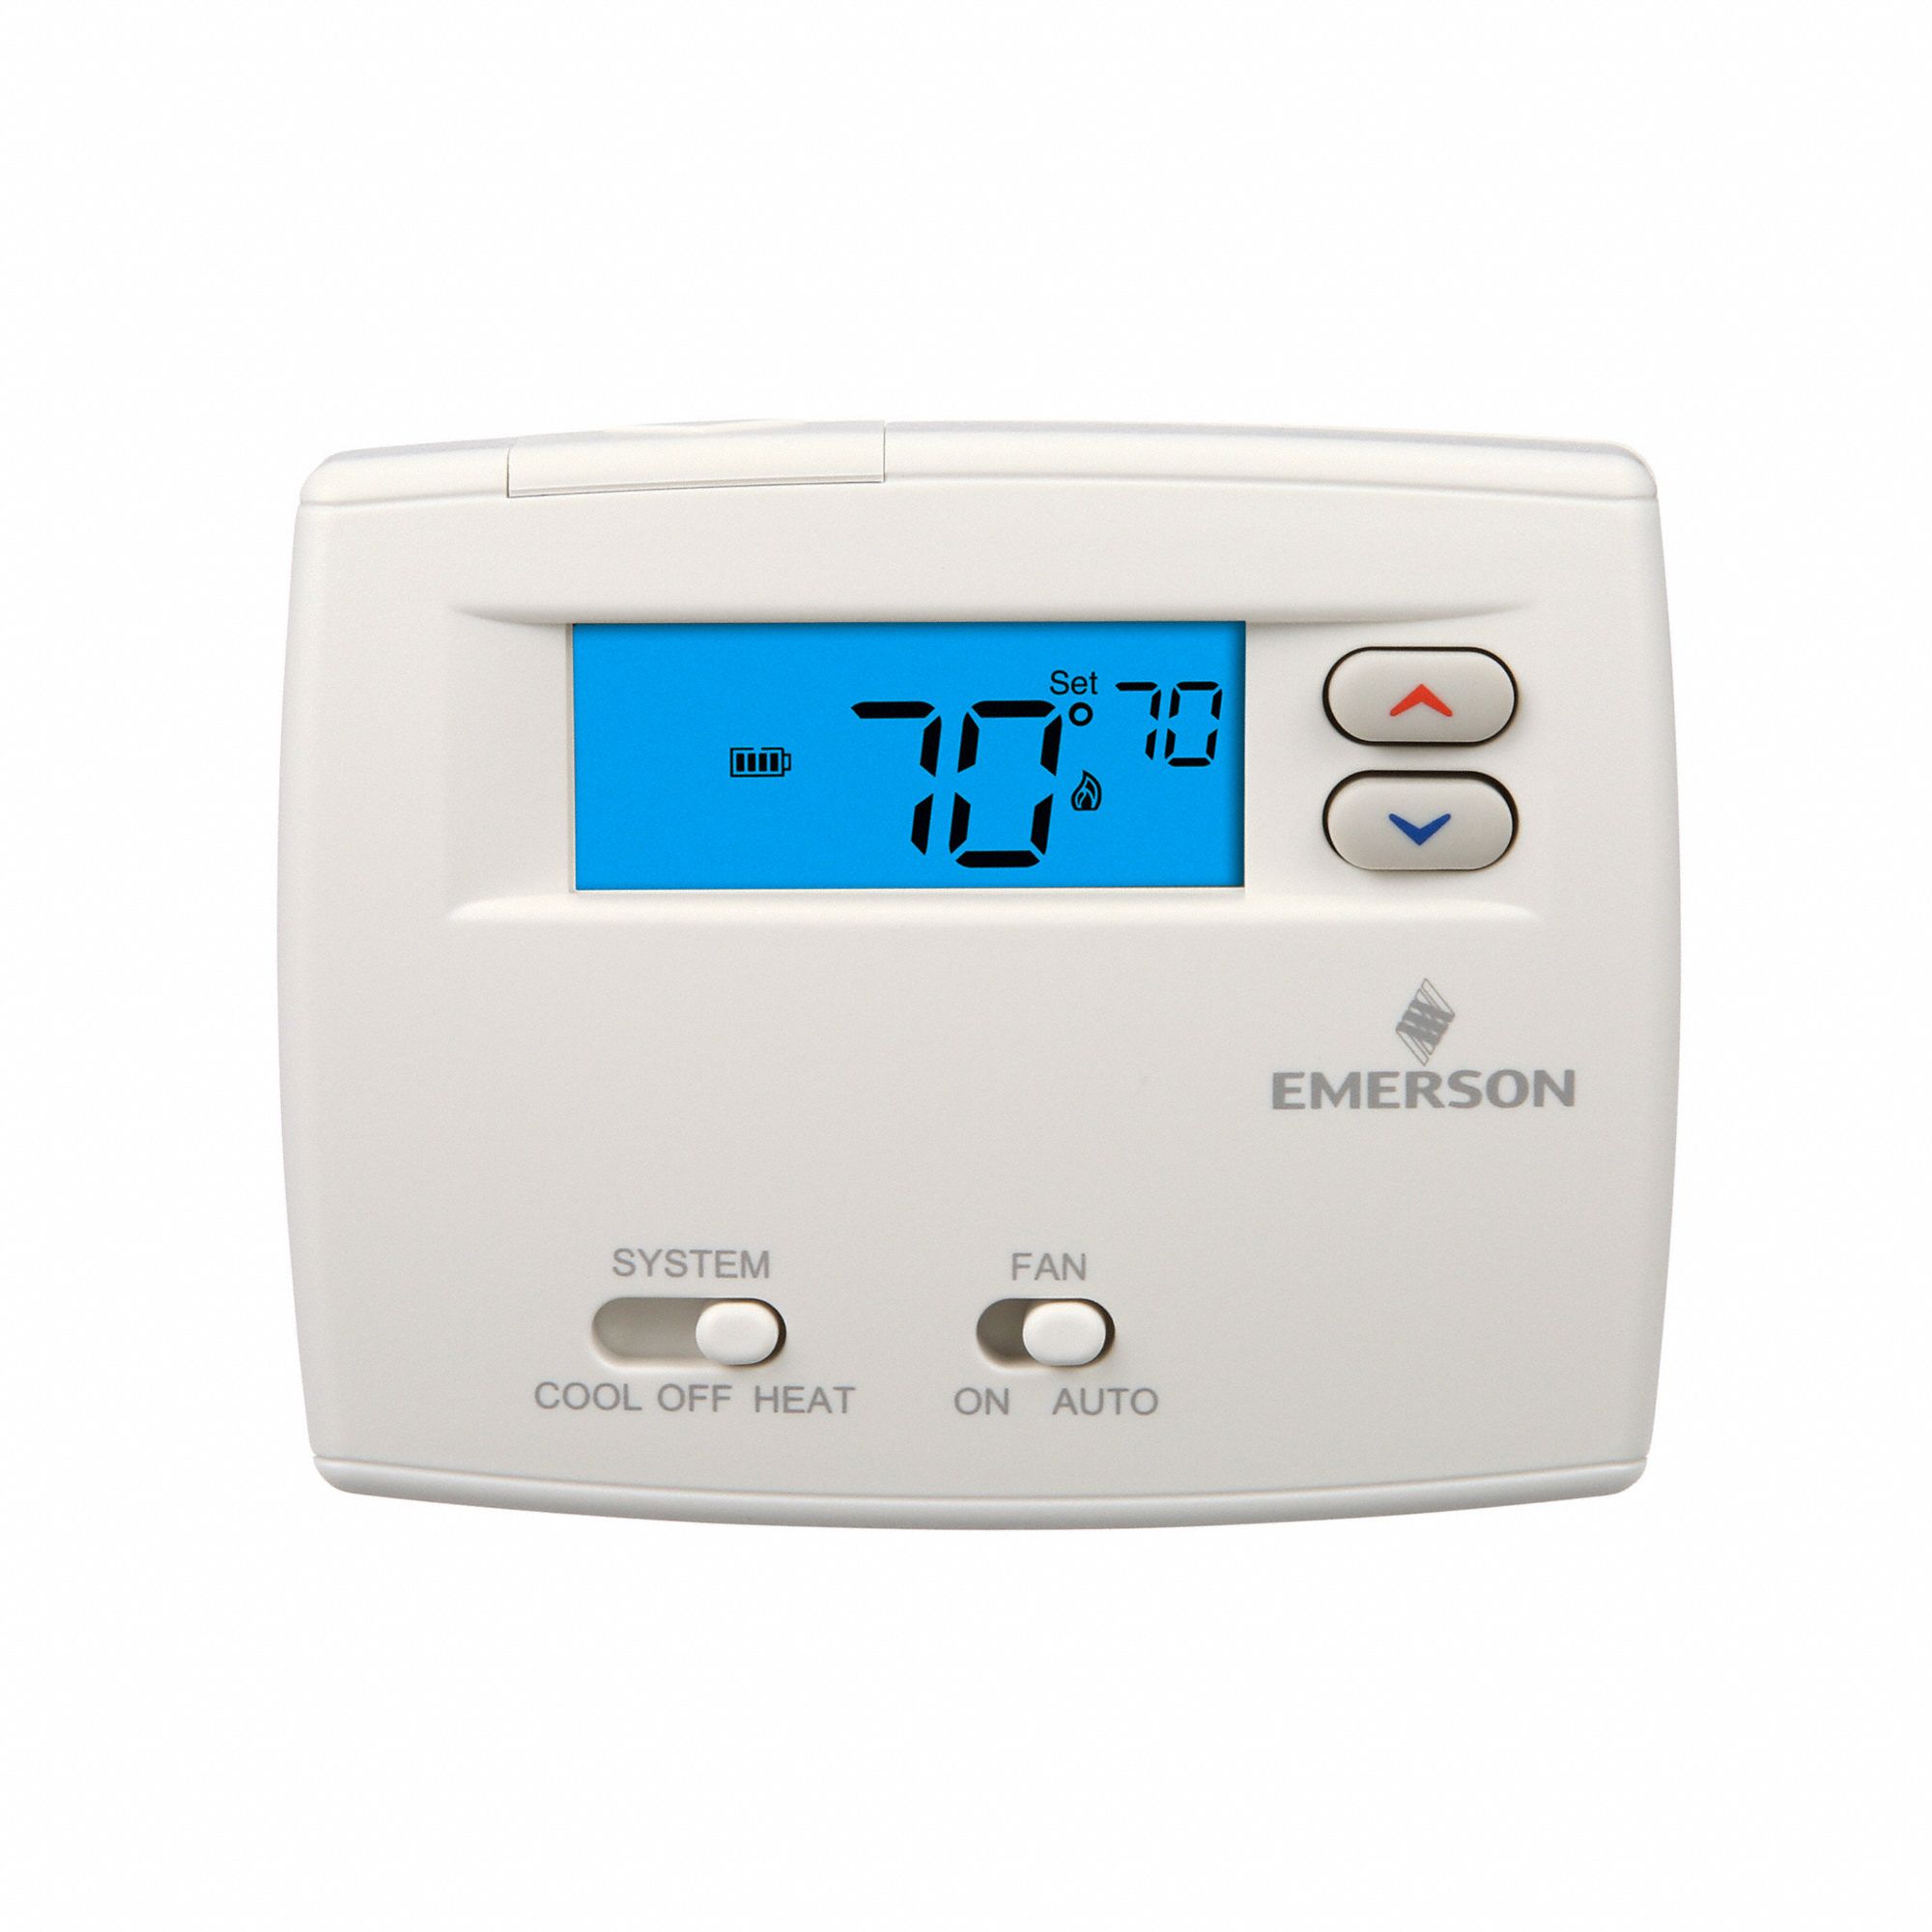 Emerson Digital Thermostat User Manuals